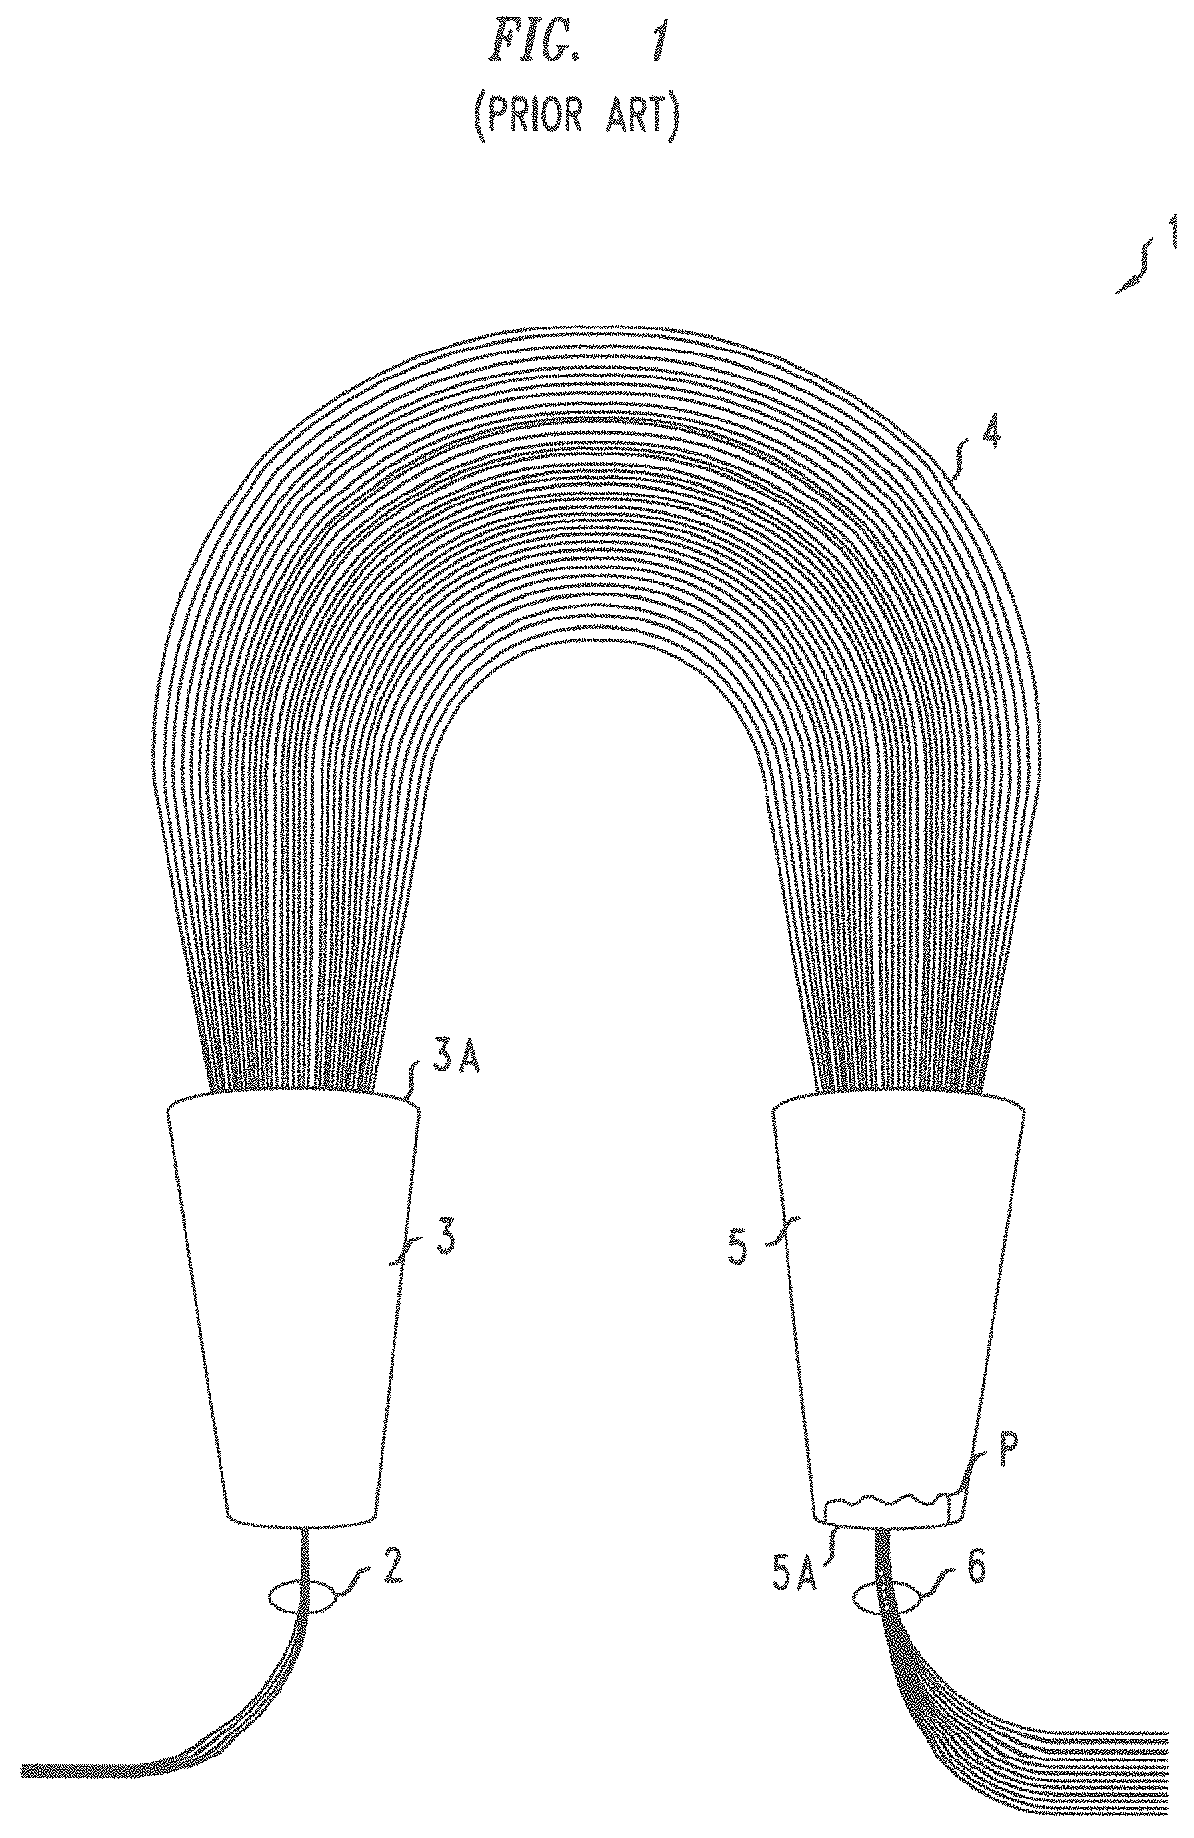 High density optical waveguide using hybrid spiral pattern